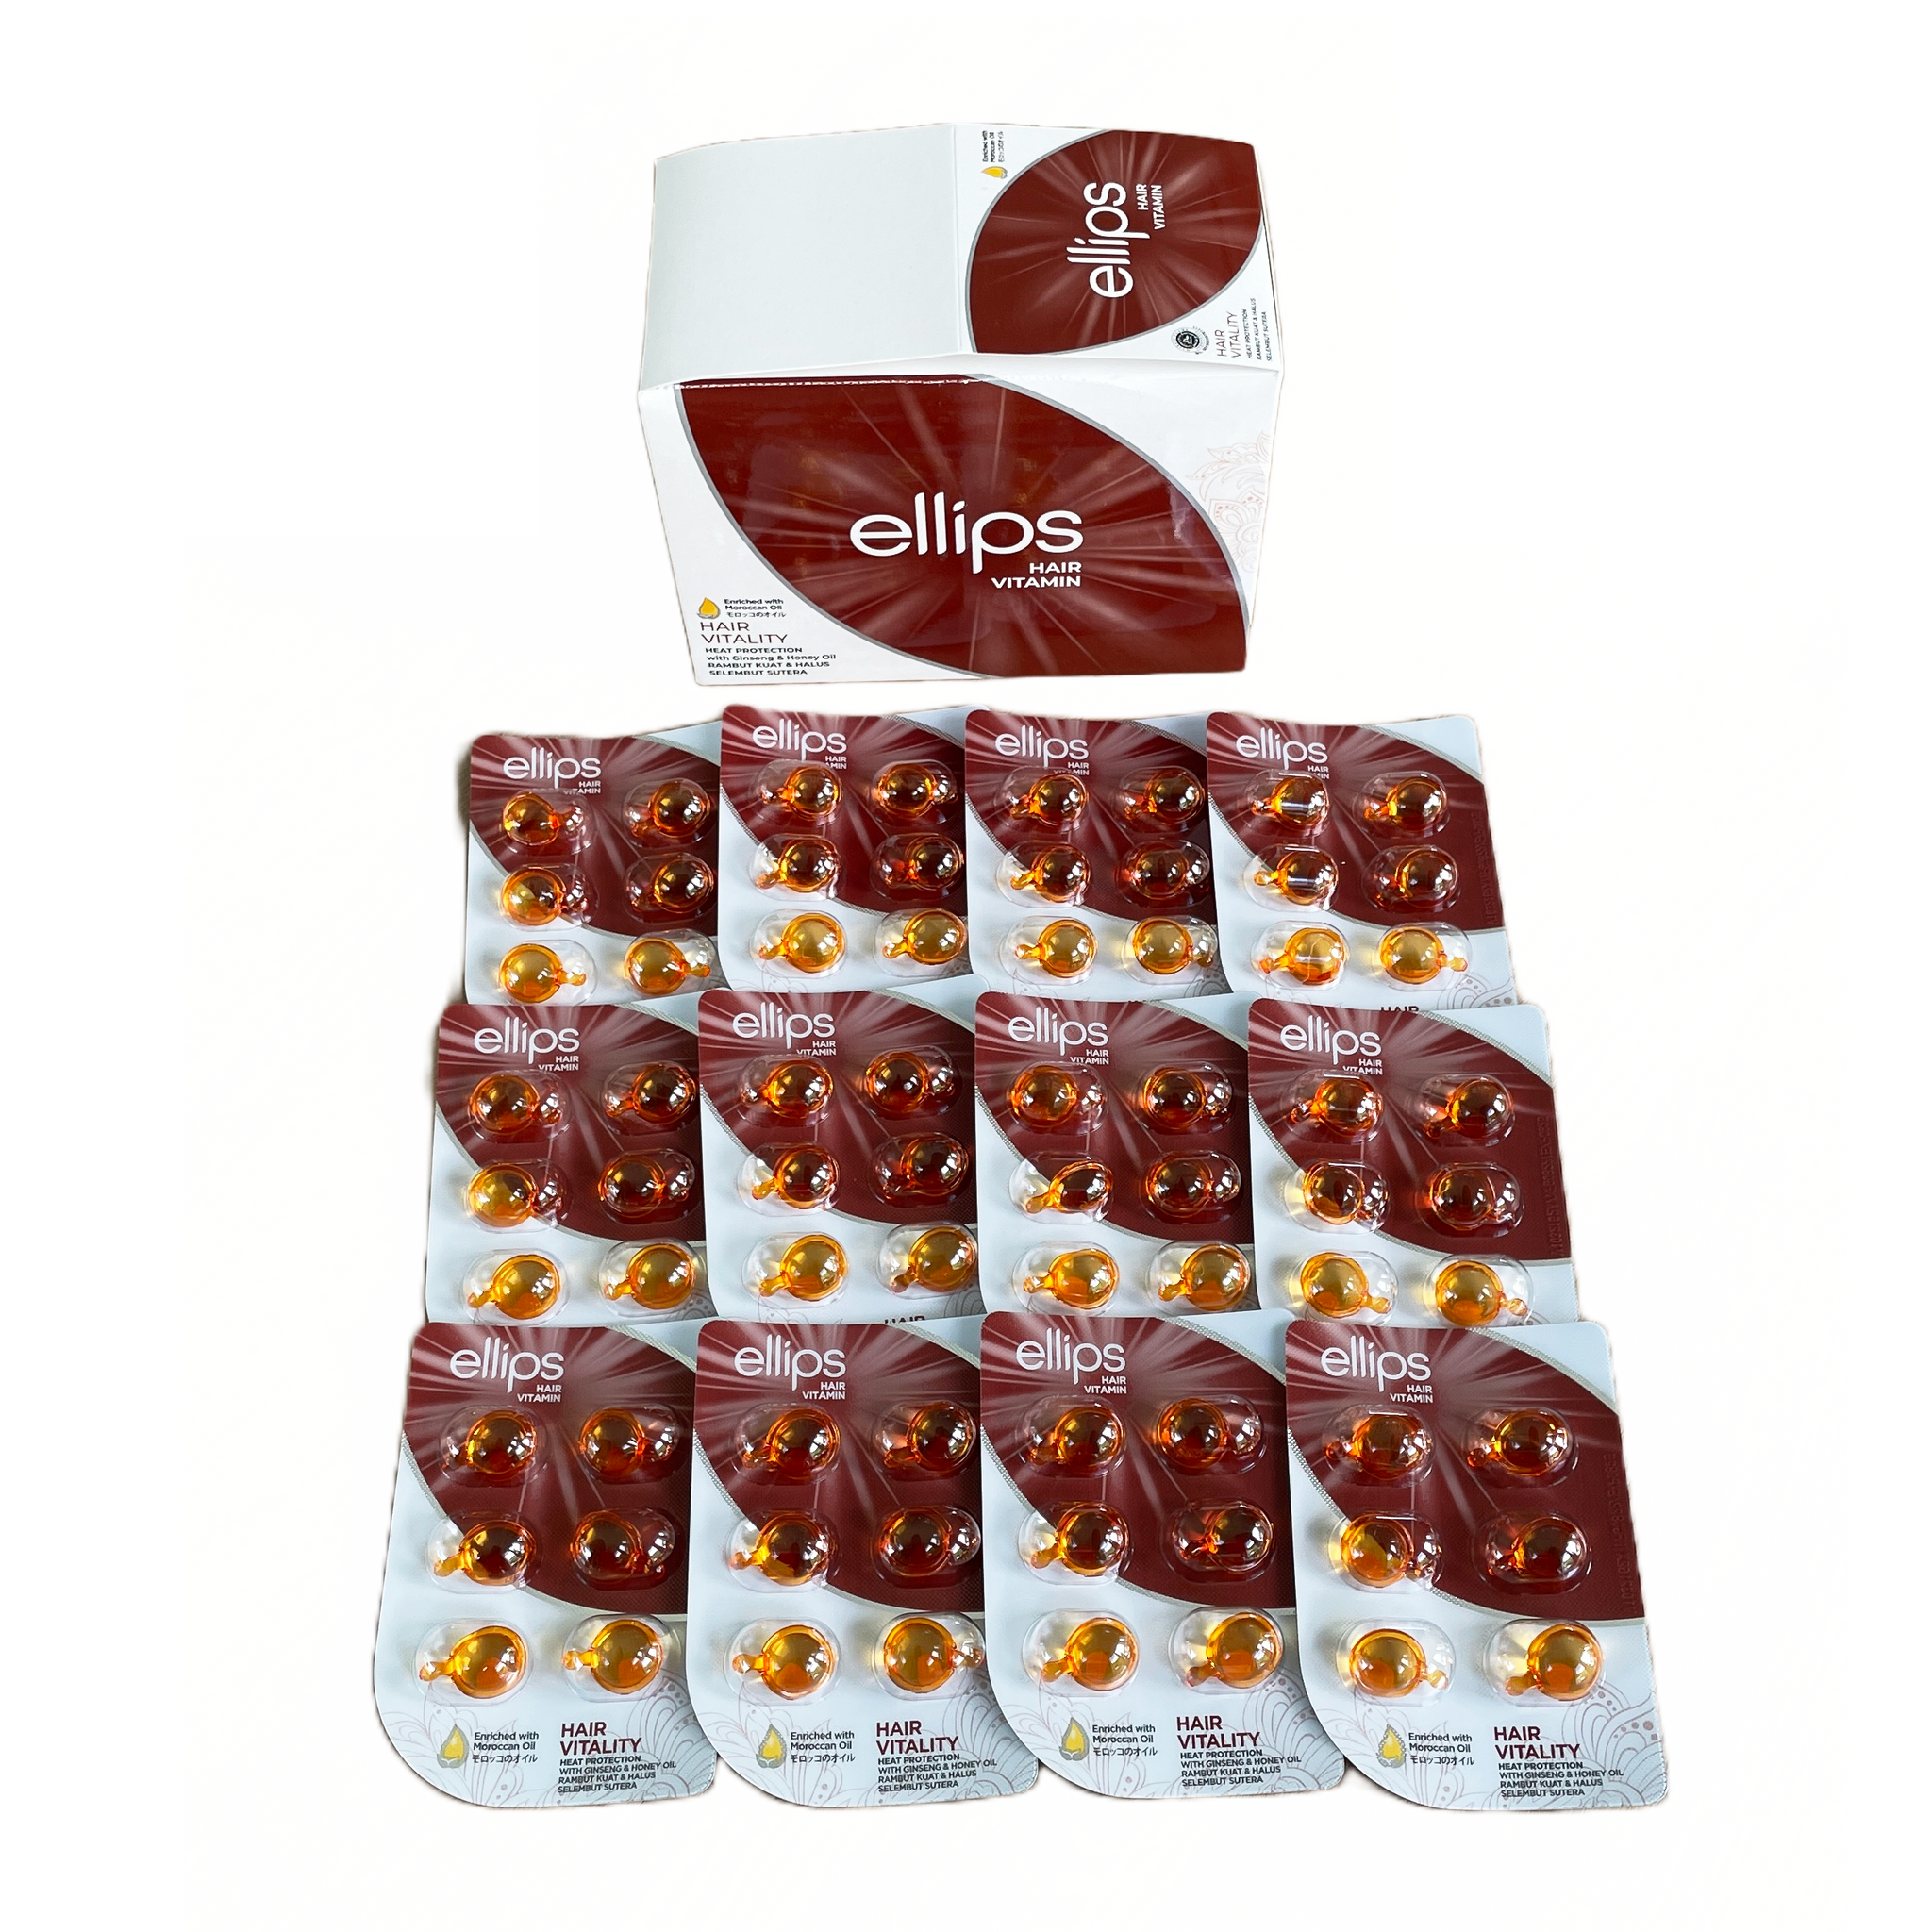 ellips Orange Hair Vitality – box of 72 capsules